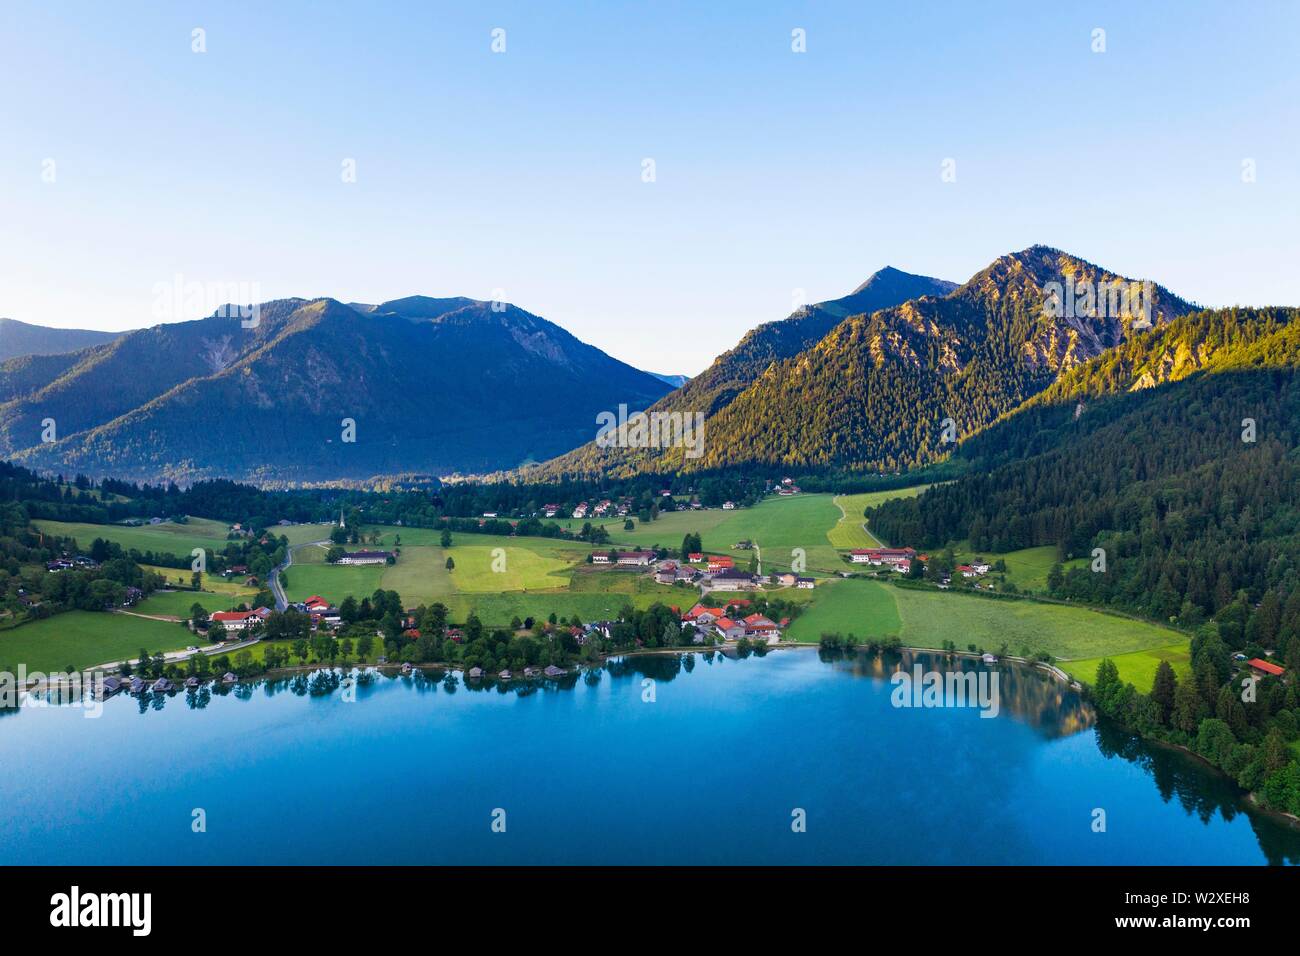 District Fischhausen, Schliersee, mountains Nagelspitz and Brecherspitz, Mangfall mountains, drone shot, Upper Bavaria, Bavaria, Germany Stock Photo